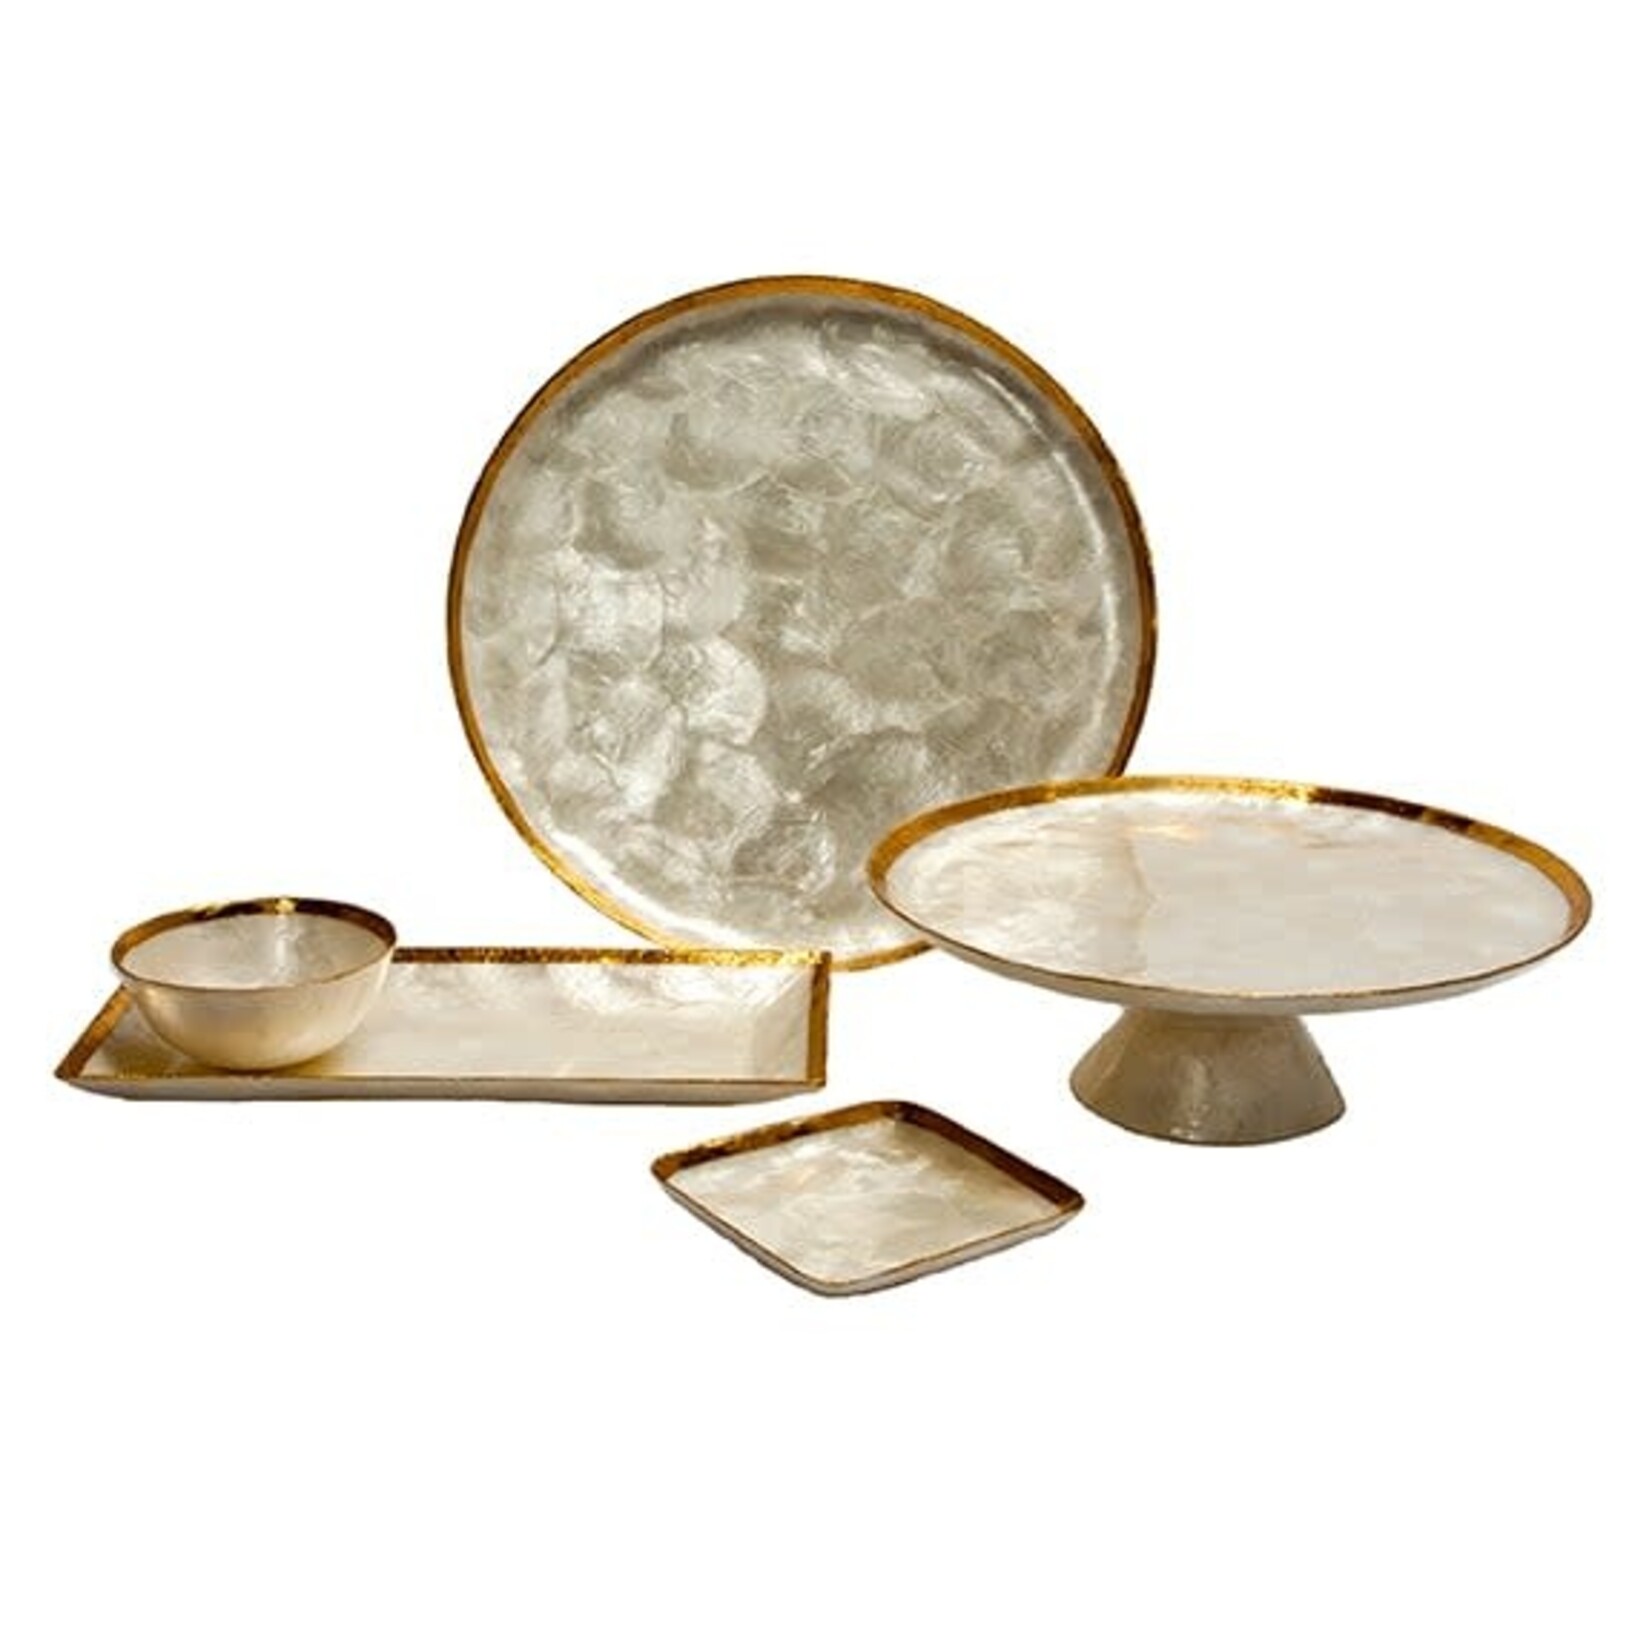 Dekorasyon Gifts & Decor 5" Capiz Square Plate with Gold Trim Natural Gold